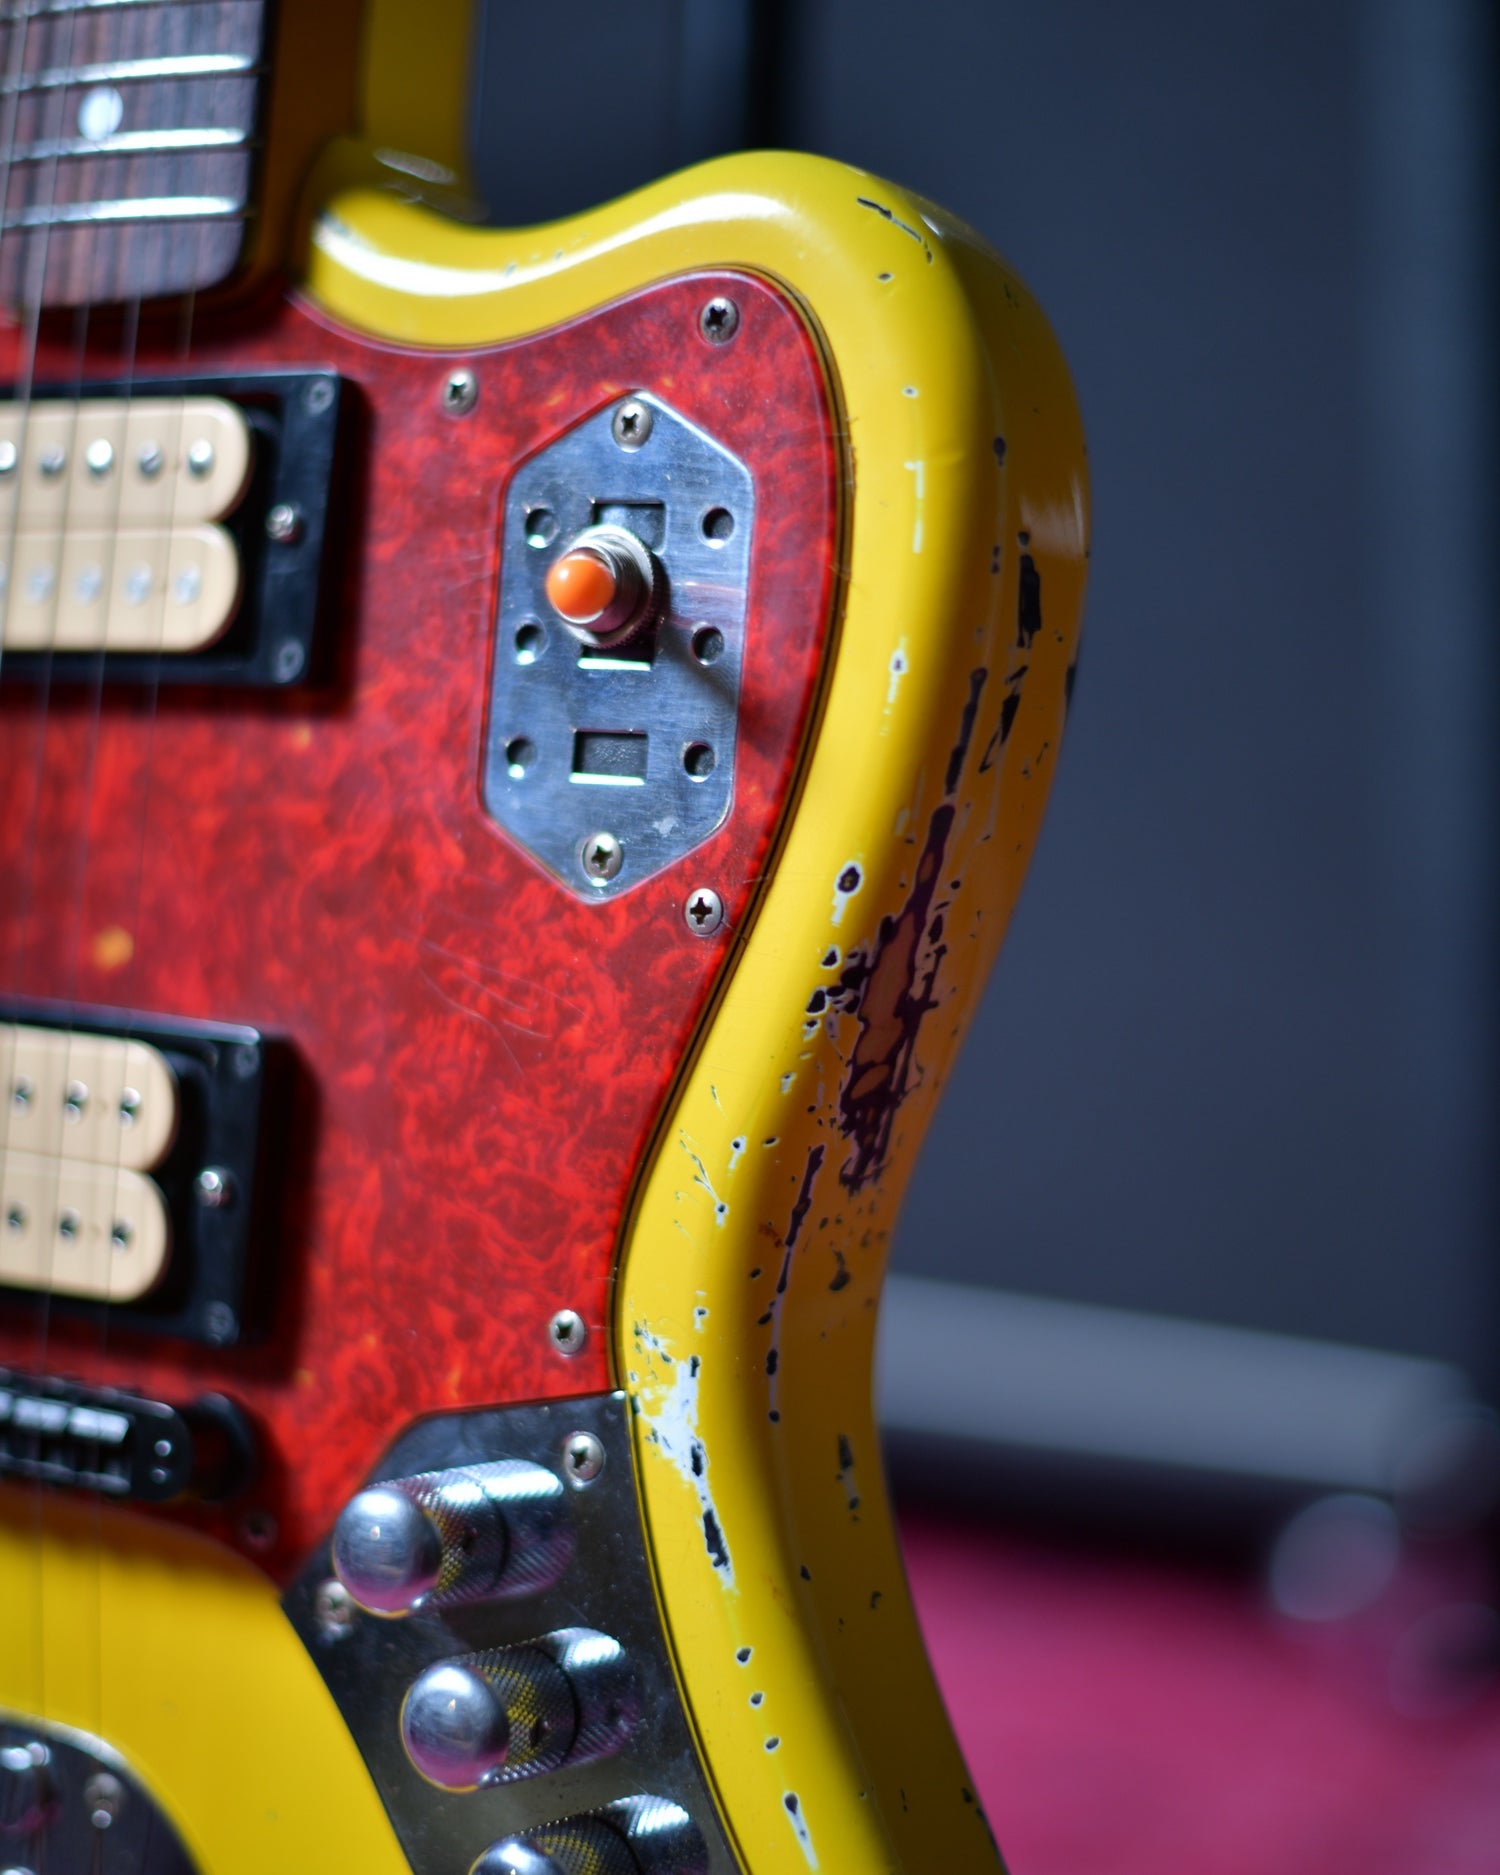 Fender Japan Jaguar Kurt Cobain Graffiti Yellow over Sunburst Heavy Relic CIJ